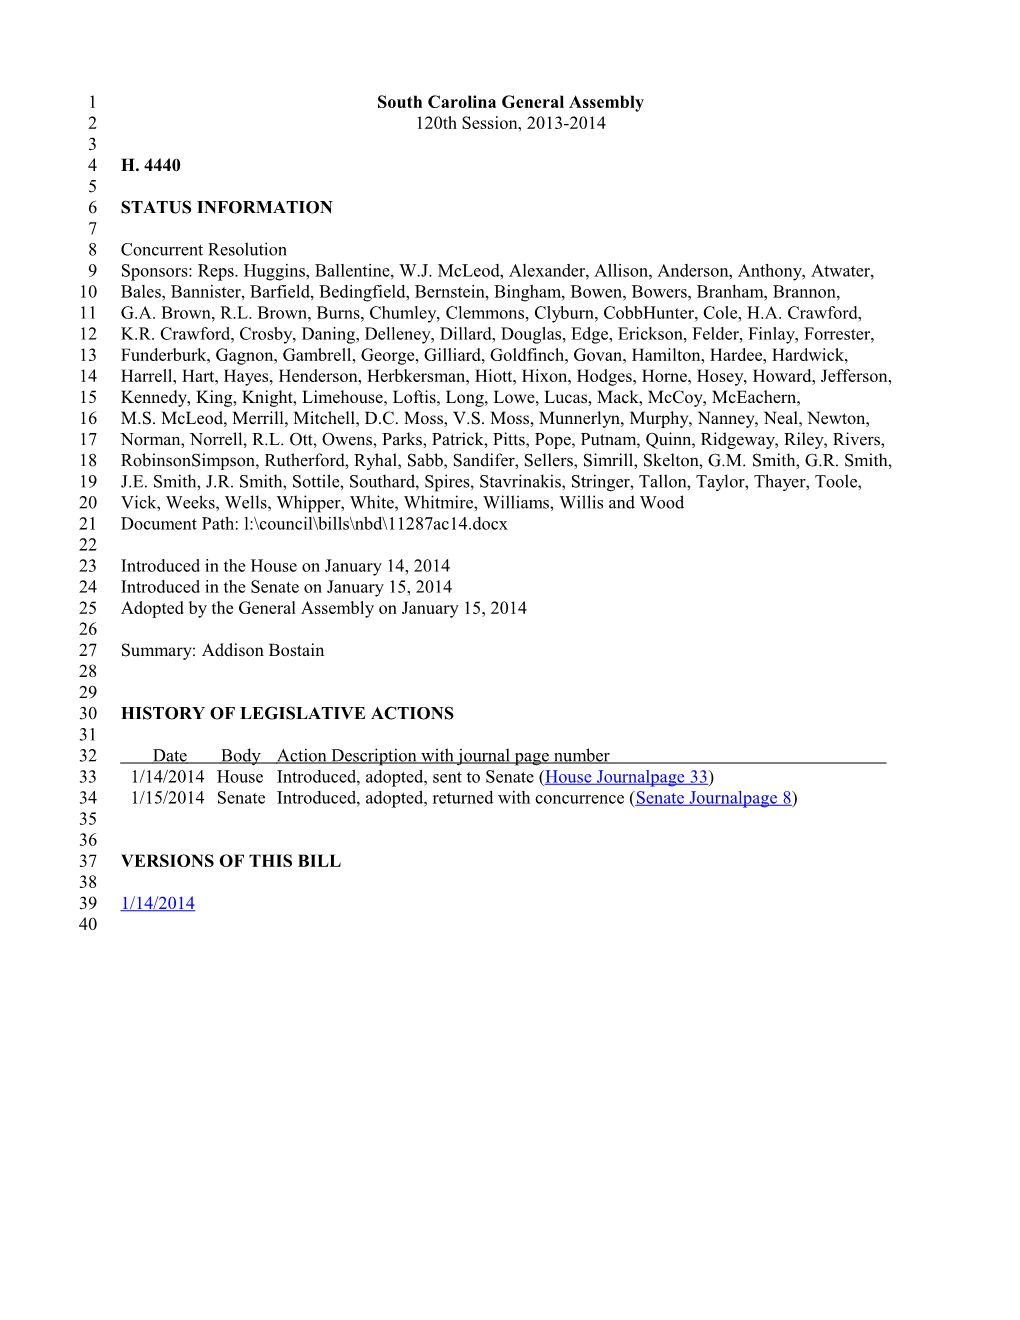 2013-2014 Bill 4440: Addison Bostain - South Carolina Legislature Online